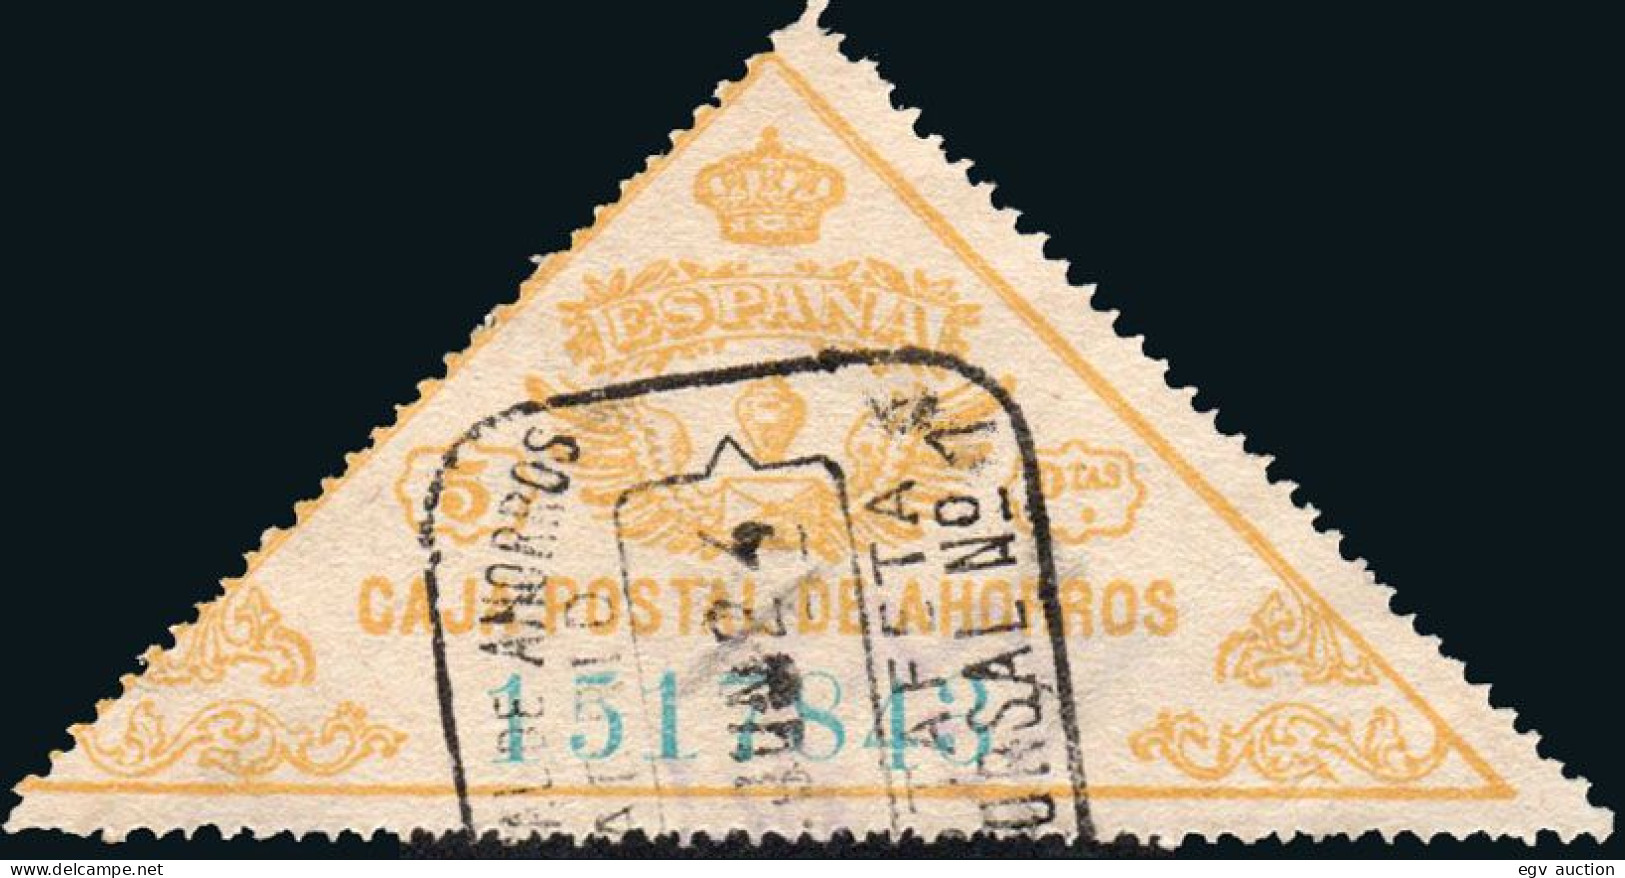 Madrid - Caja Postal Ahorros - Gálvez O 5 - Mat "Estafeta Sucursal N.º 1 - Caja Postal Ahorros" - Steuermarken